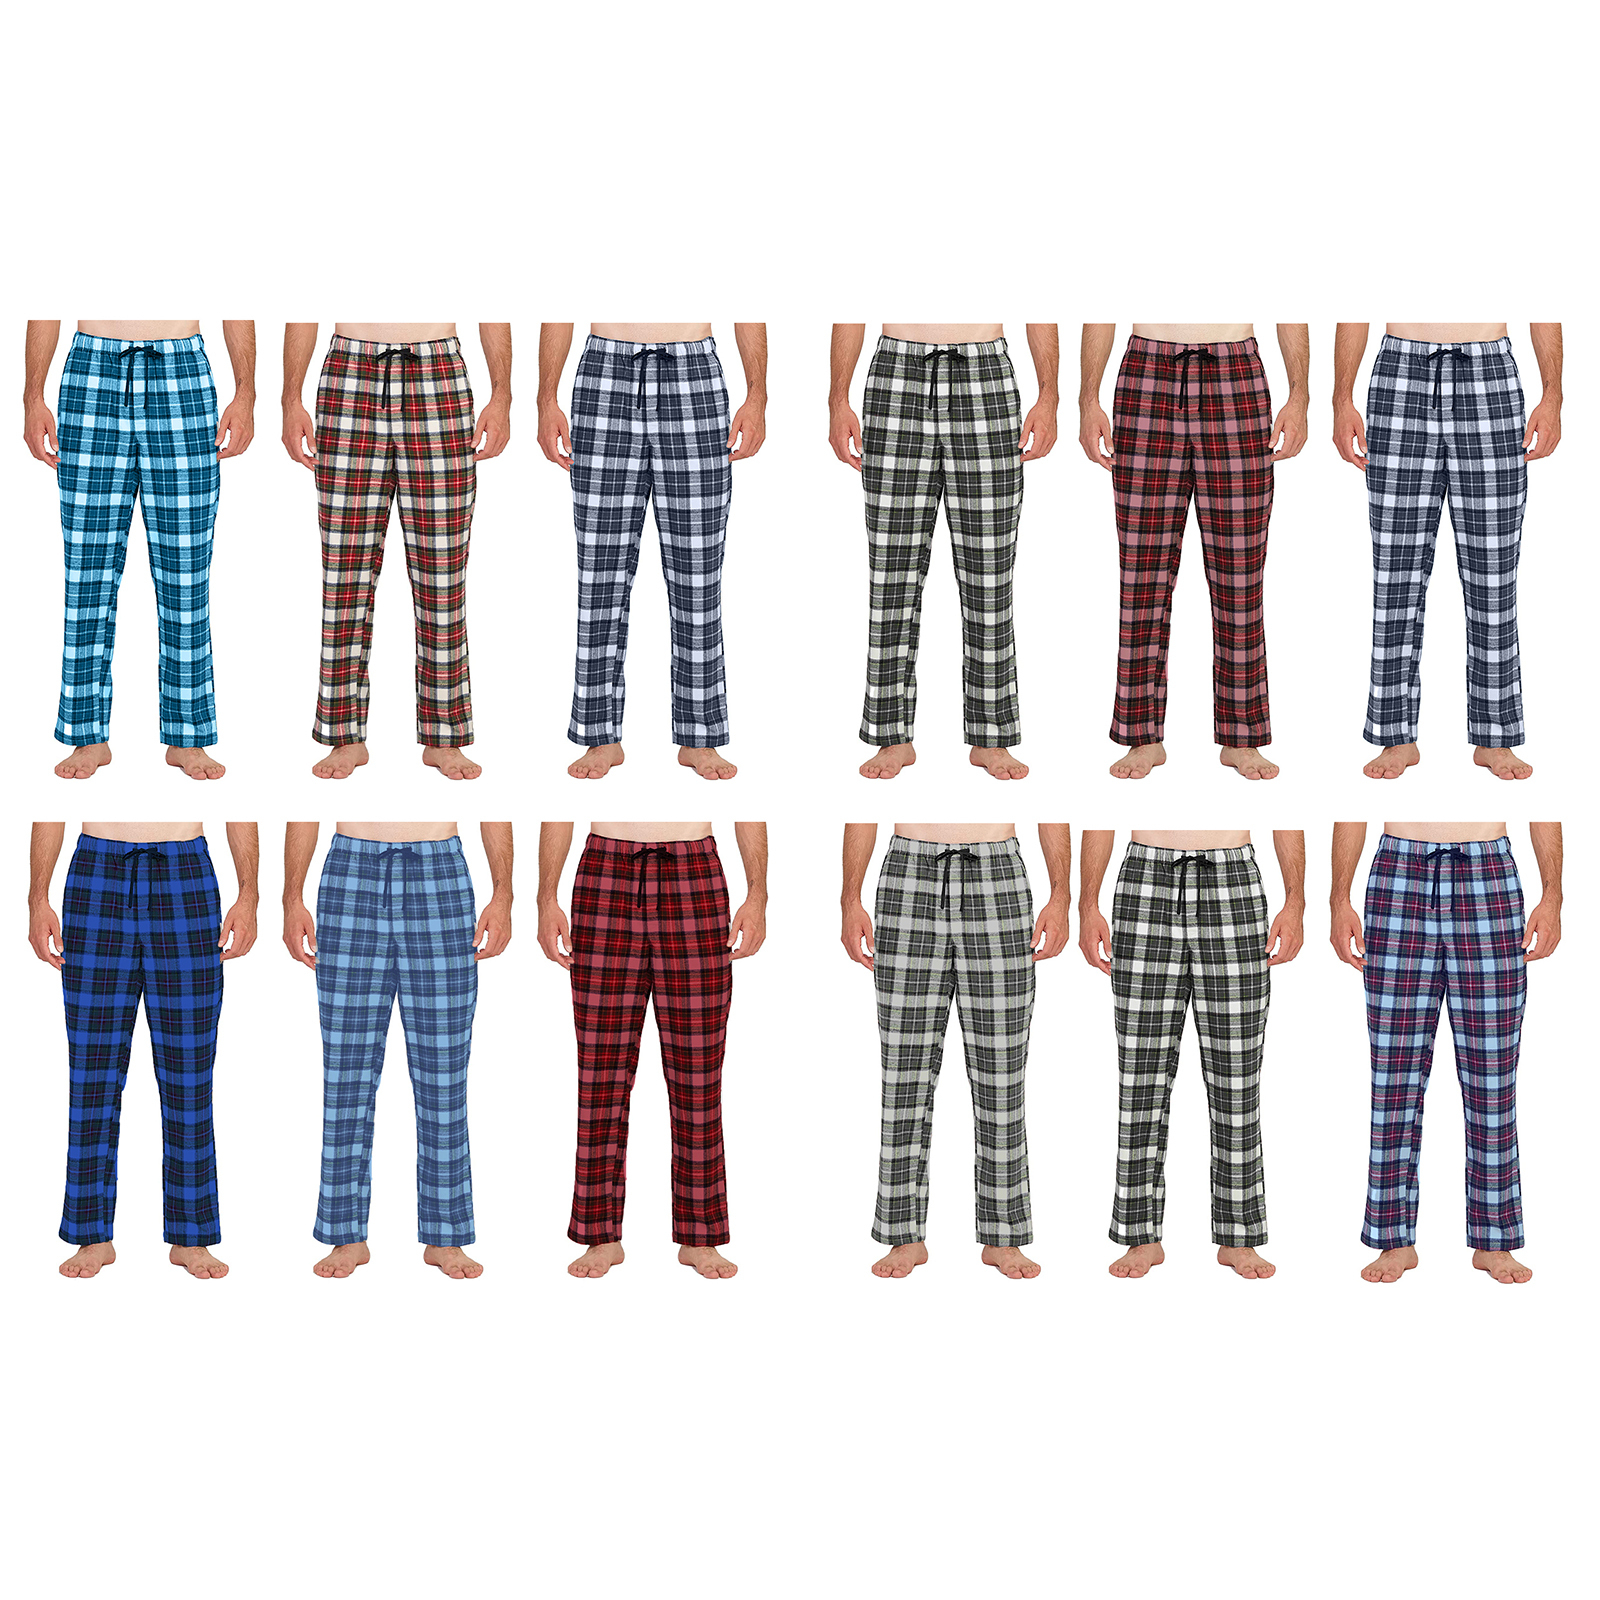 2-Pack: Men's Soft 100% Cotton Flannel Plaid Lounge Pajama Sleep Pants - Large